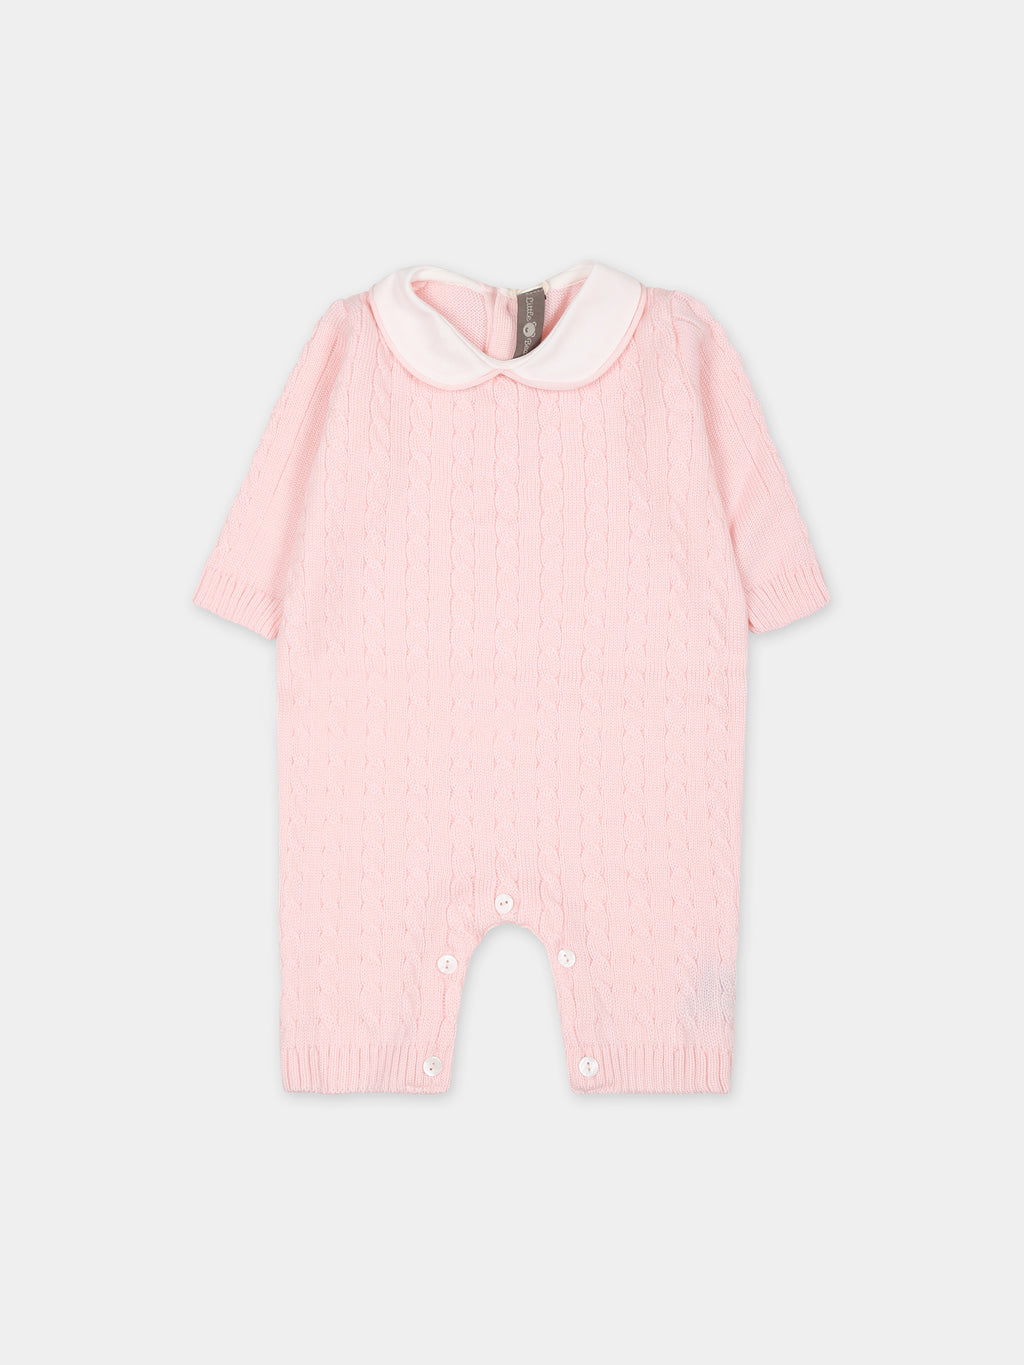 Pink babygrown for baby girl